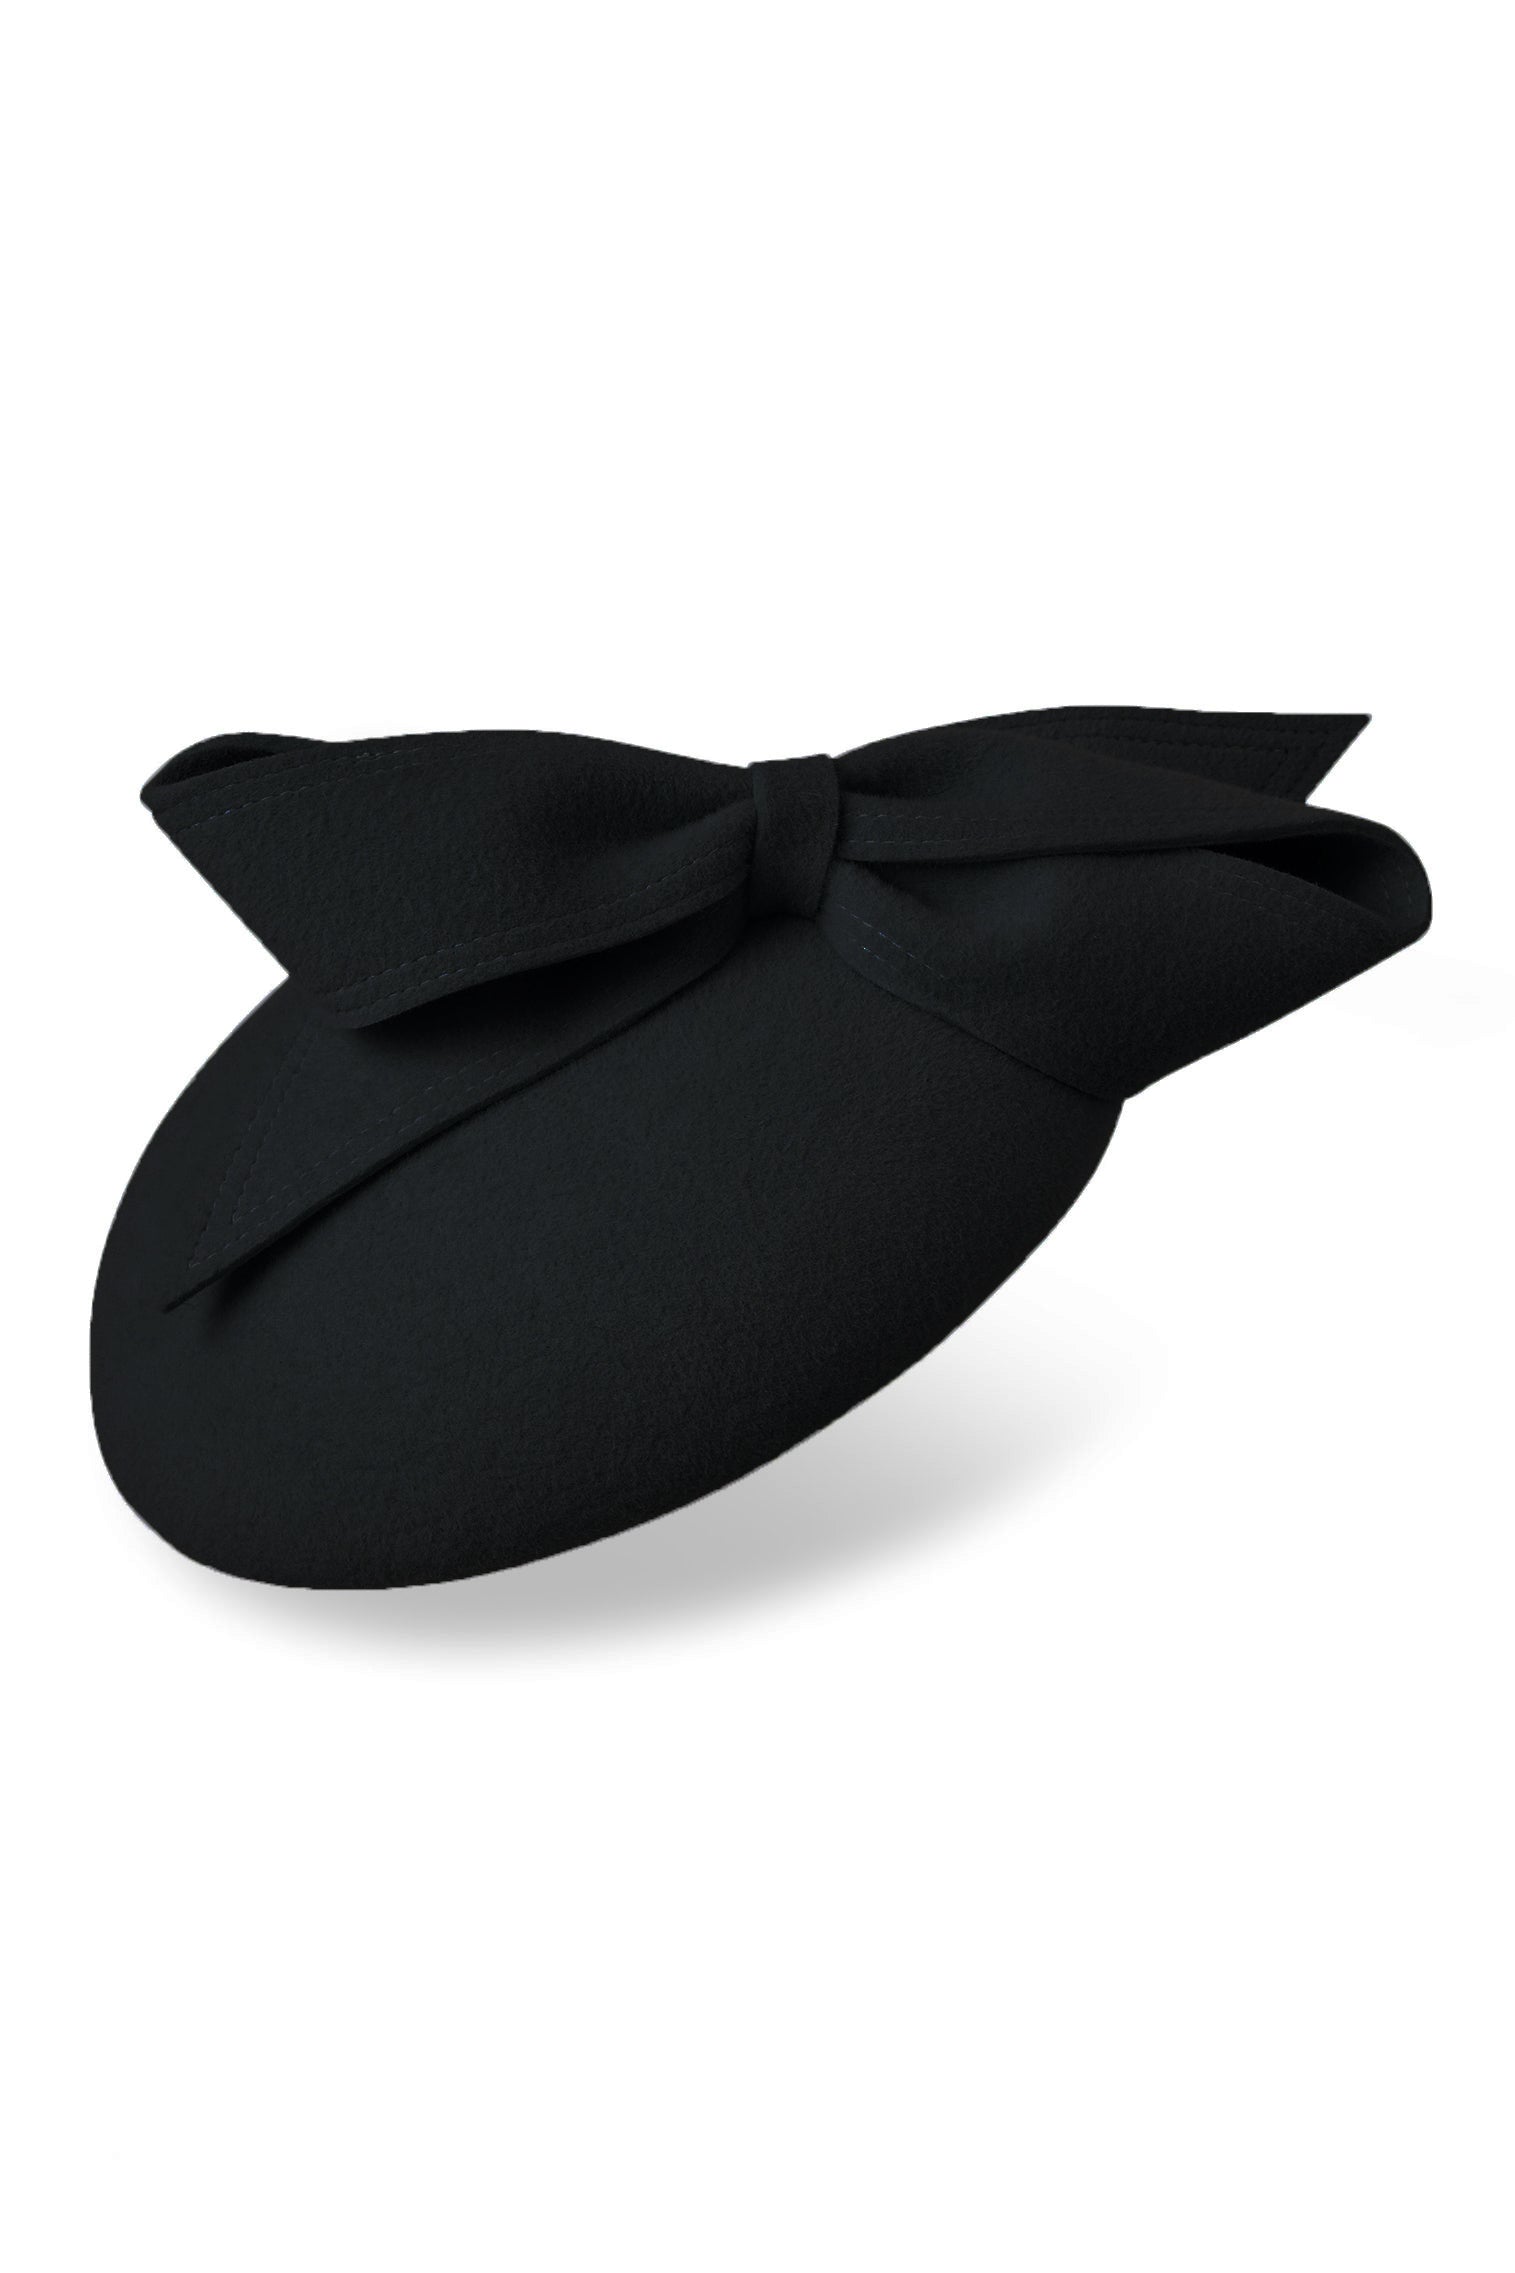 Lana Black Button Hat - Royal Ascot Hats - Lock & Co. Hatters London UK